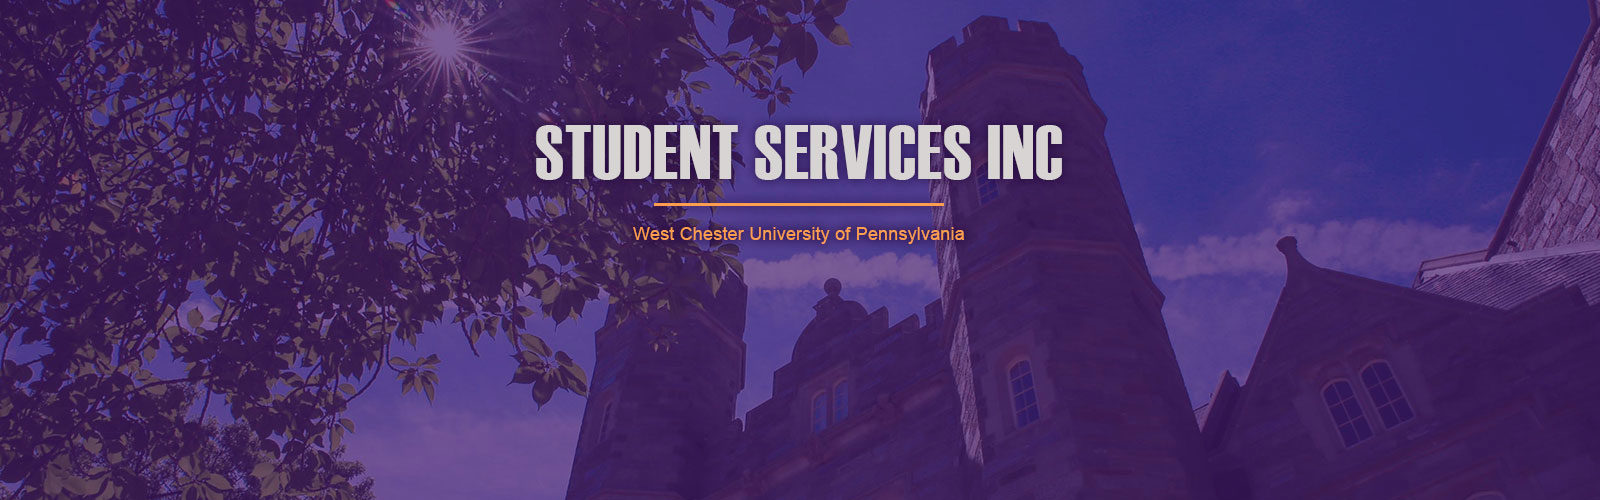 Student Servics, Inc. West Chester University